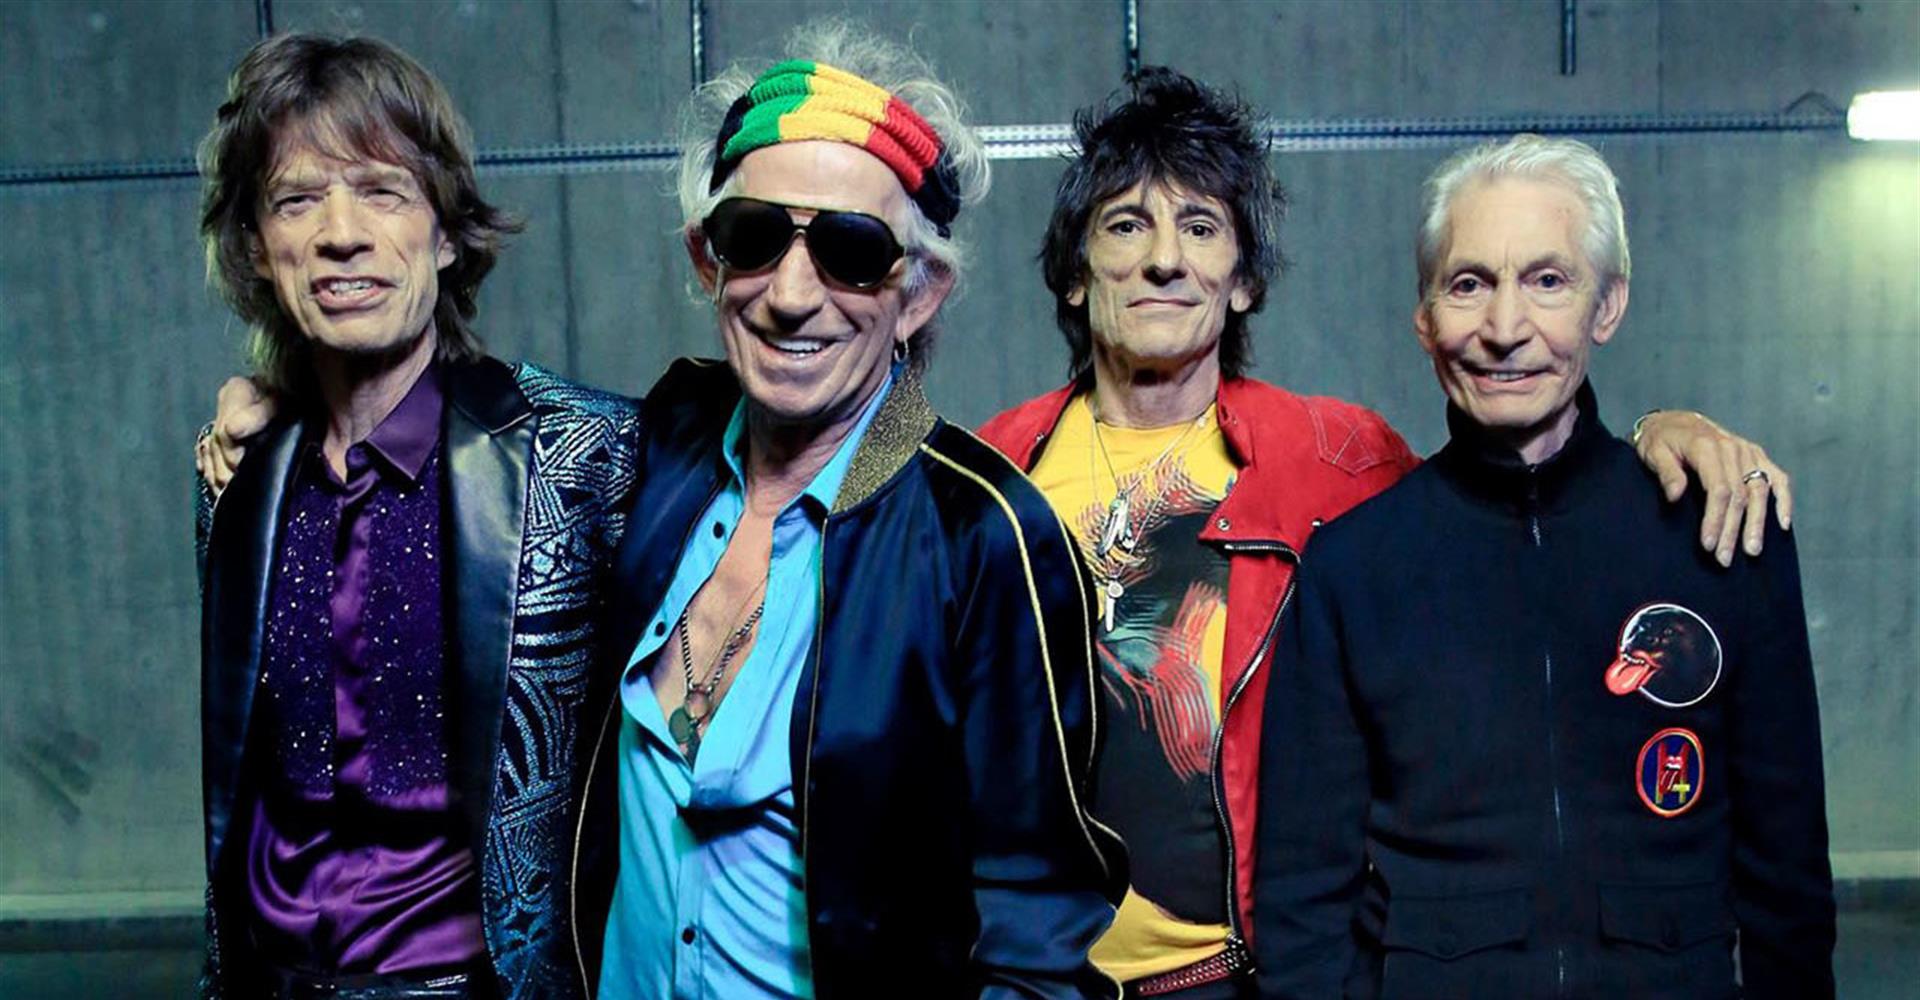 Rang grind Koreaans The Rolling Stones to announce 2019 US tour? | Festileaks.com